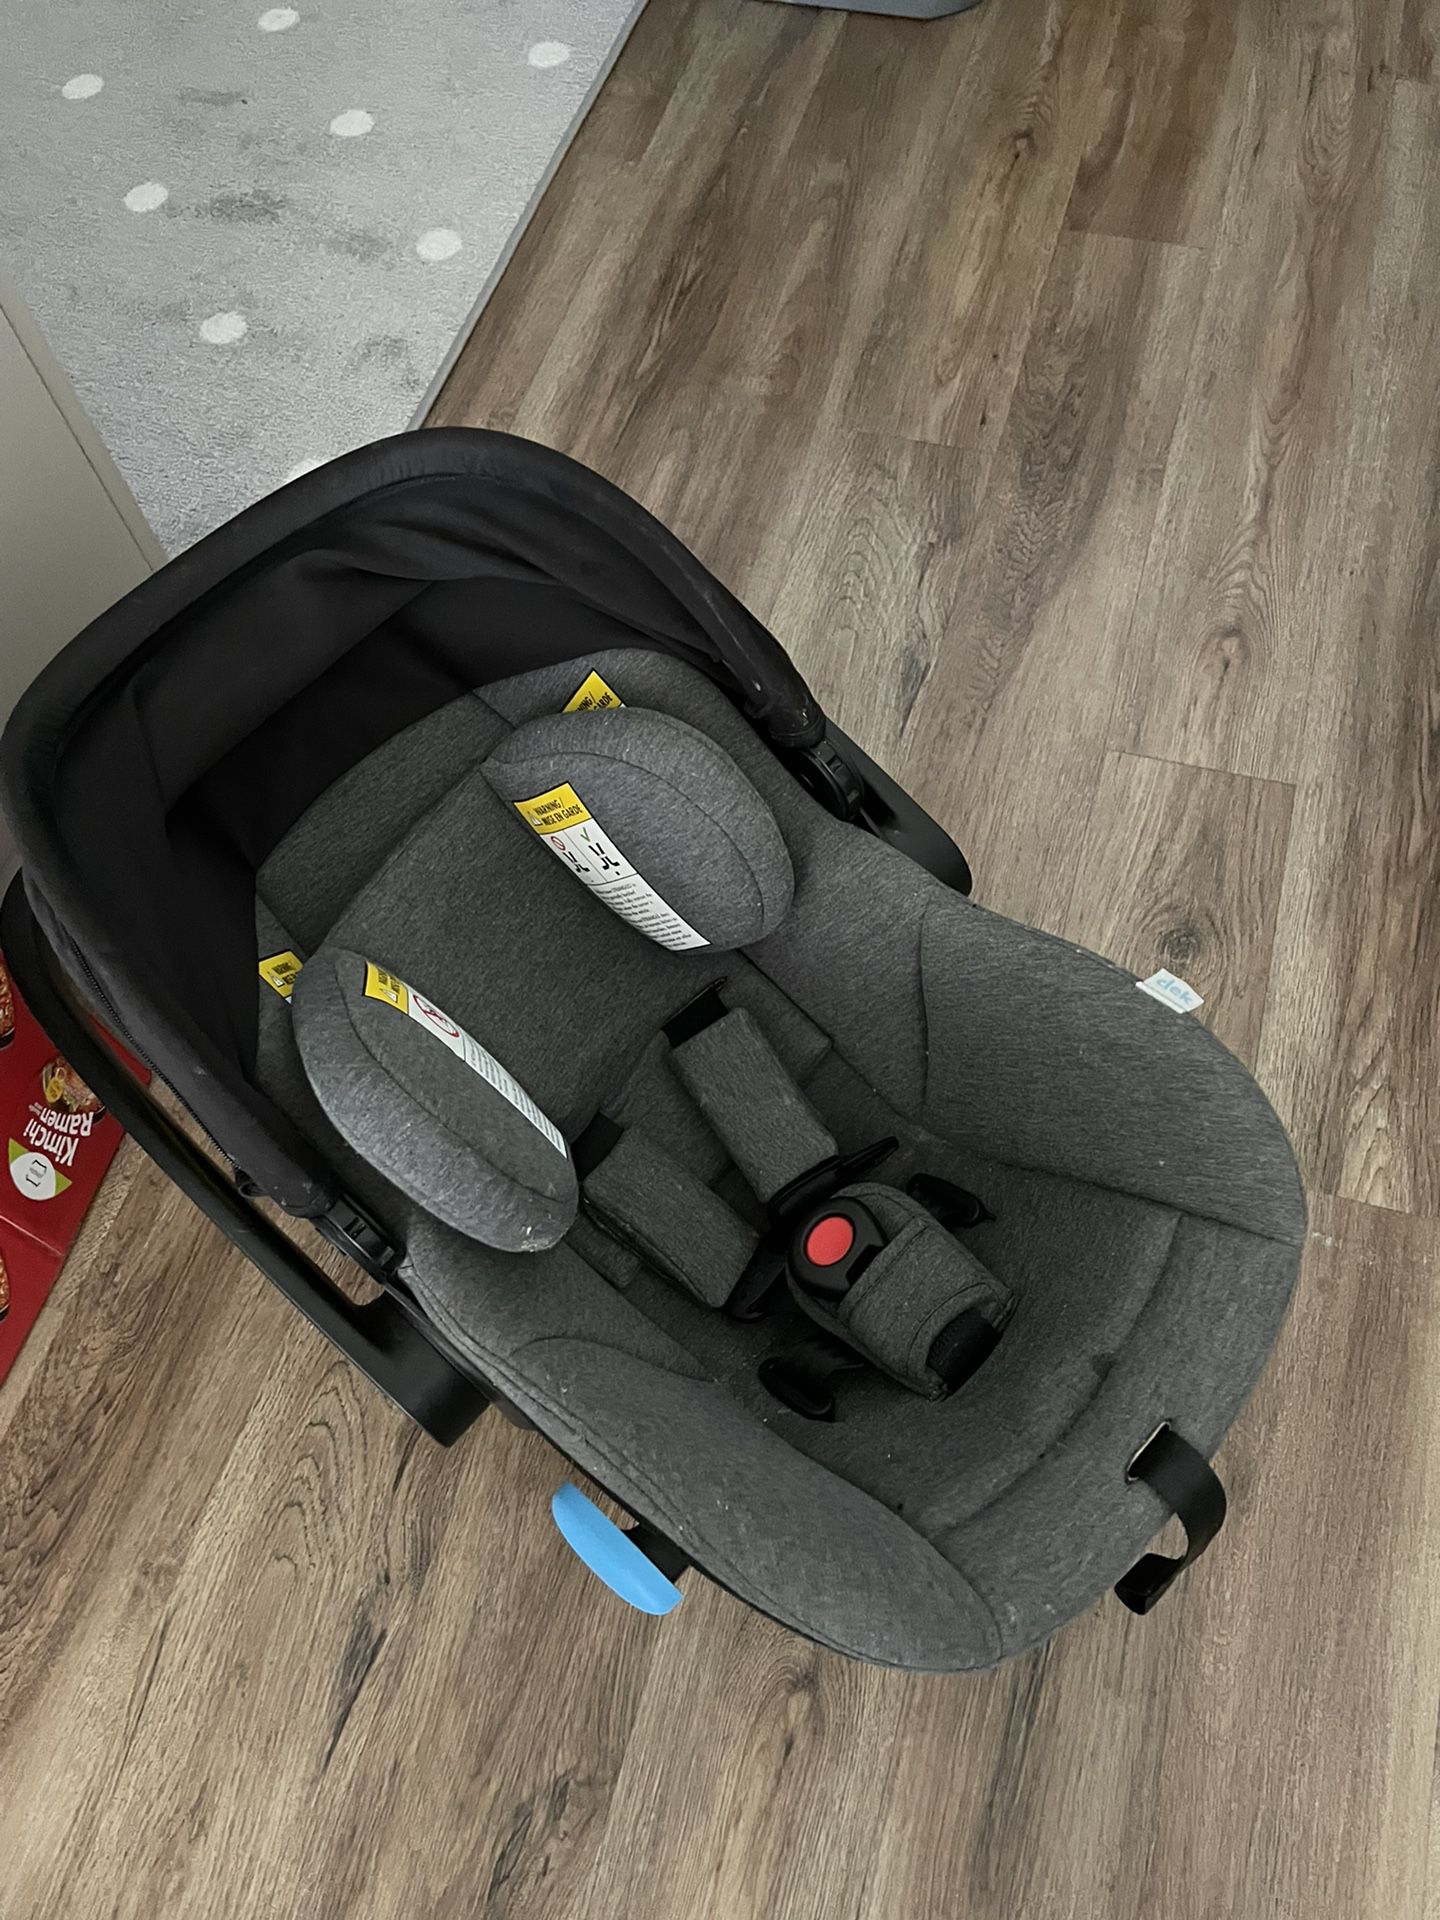 clek baby car seat